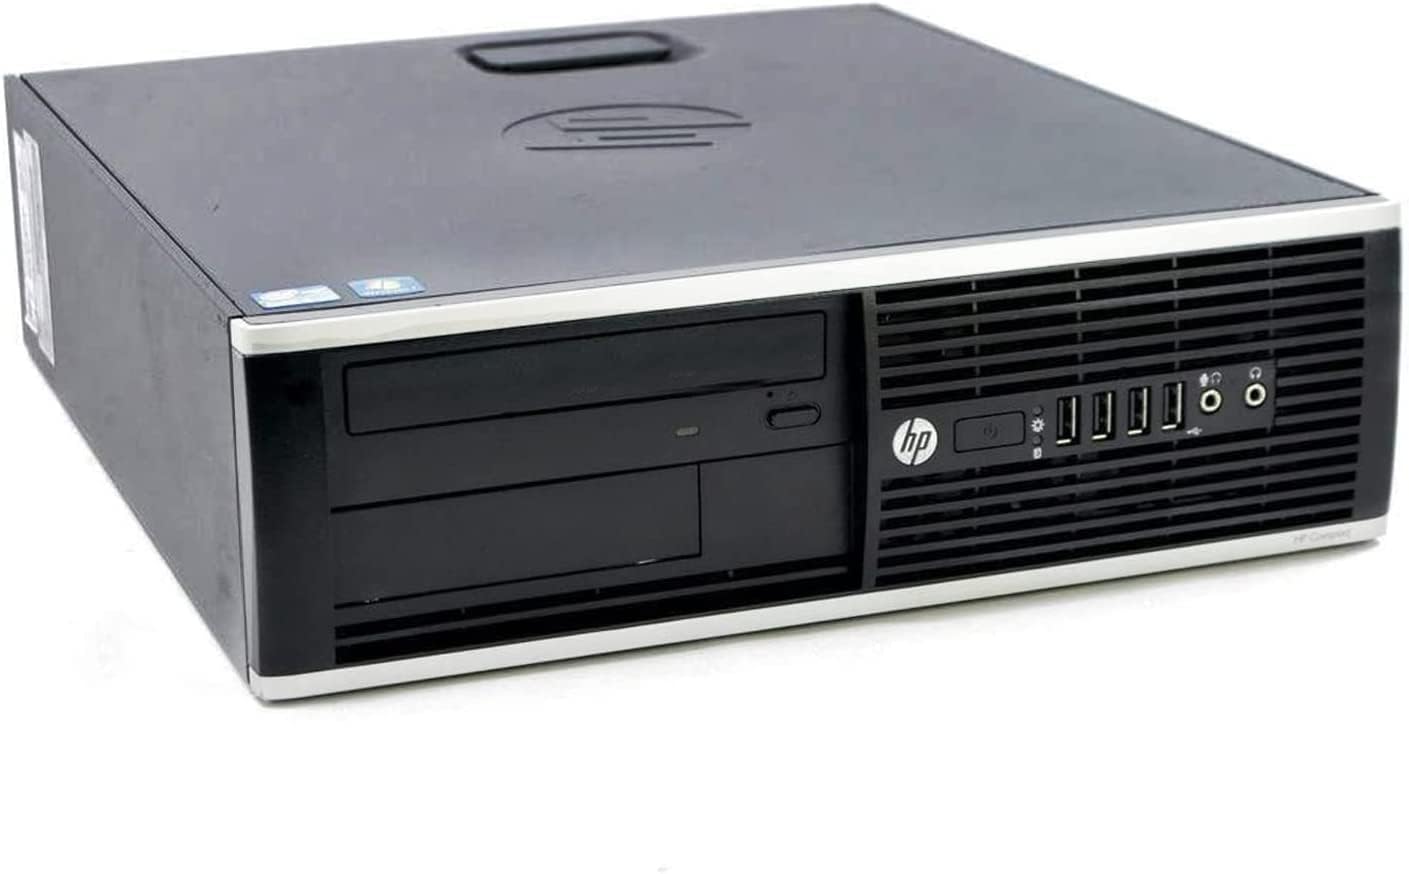 HP Elite Desktop PC Computer | Intel Quad-Core i5 | 8GB Ram | 1TB HDD | 24 Inch LCD Monitor (1080p HDMI), RGB Keyboard + Mouse | Desk Speakers | WiFi + Bluetooth | Windows 10 (Renewed)